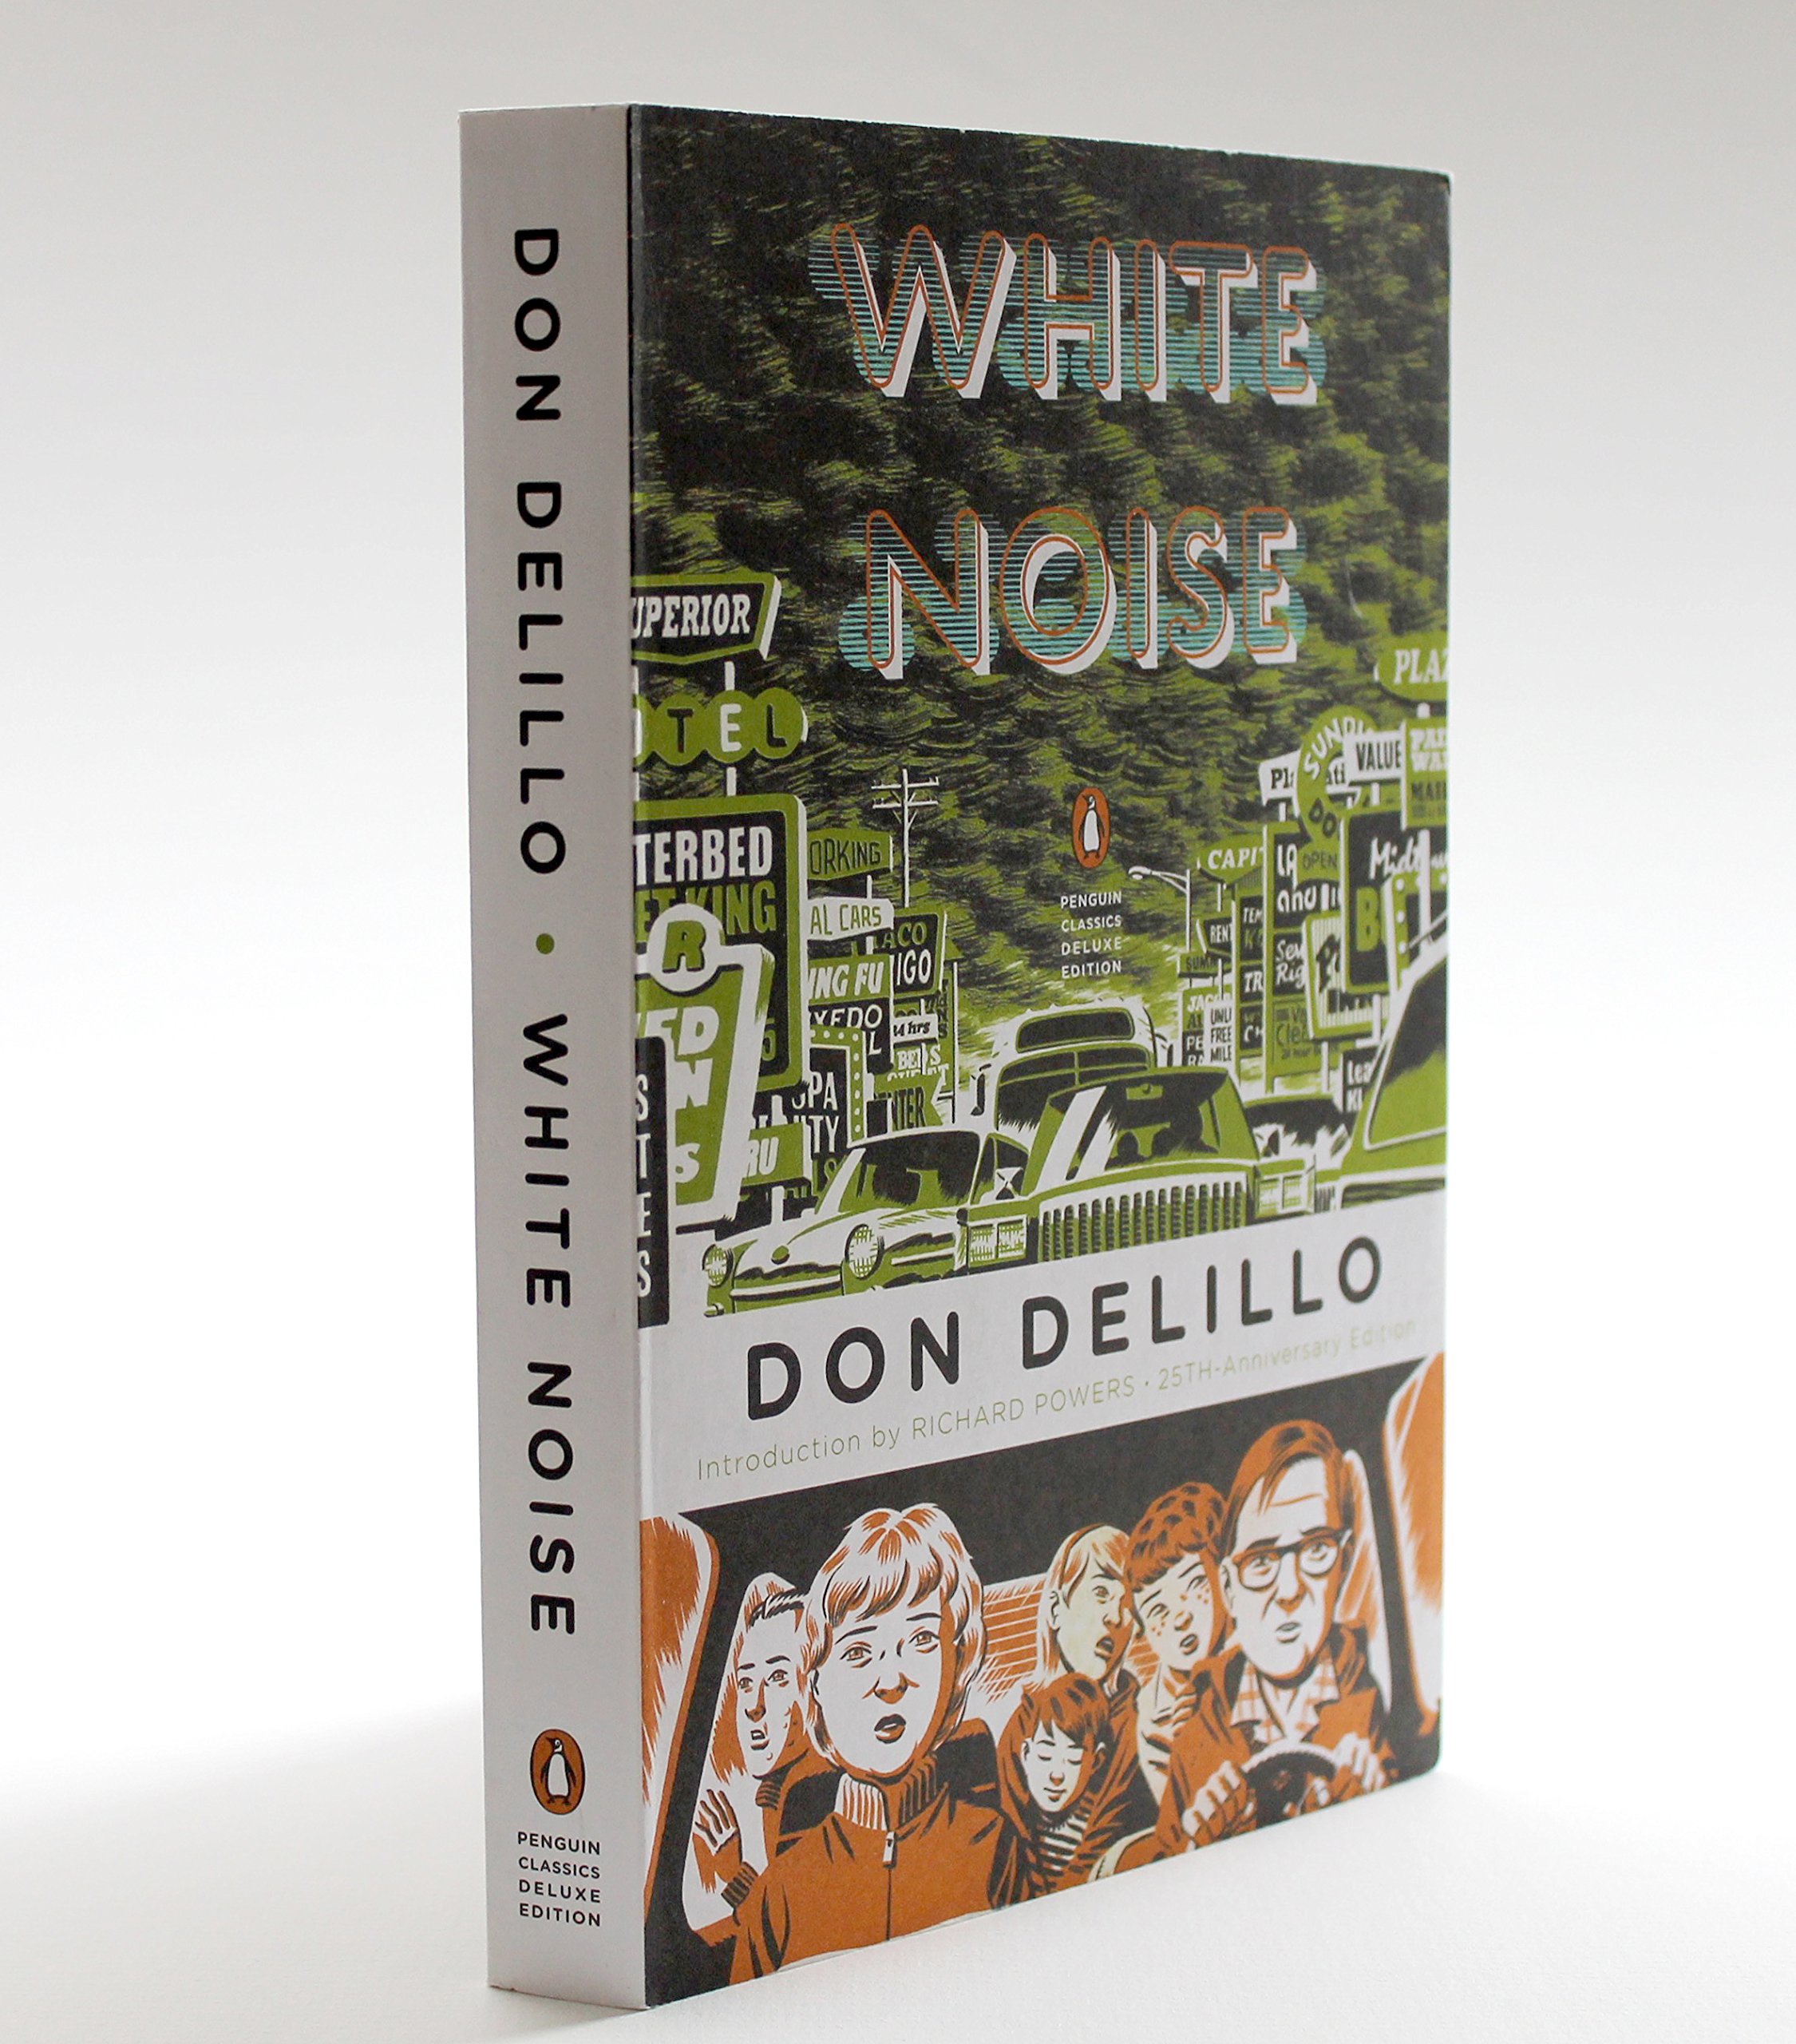 Frontlist | Noah Baumbach to adapt Don DeLillo’s novel